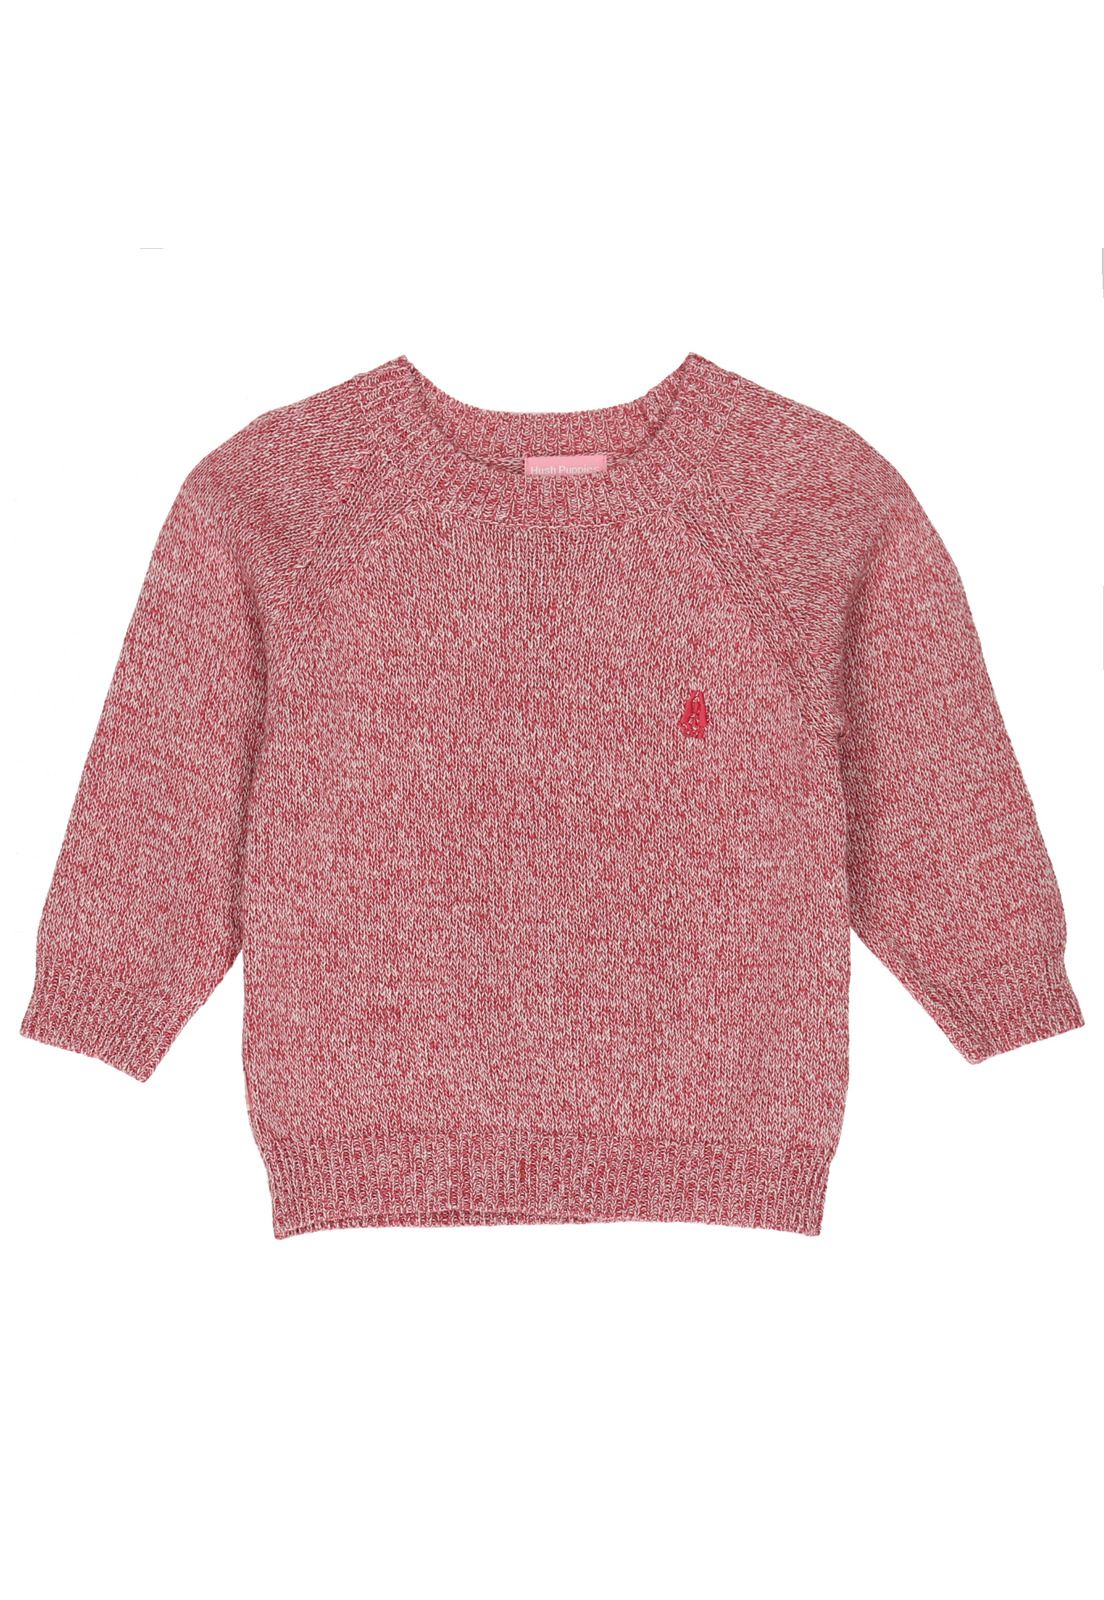 Sweater Niña Confetti Rosado